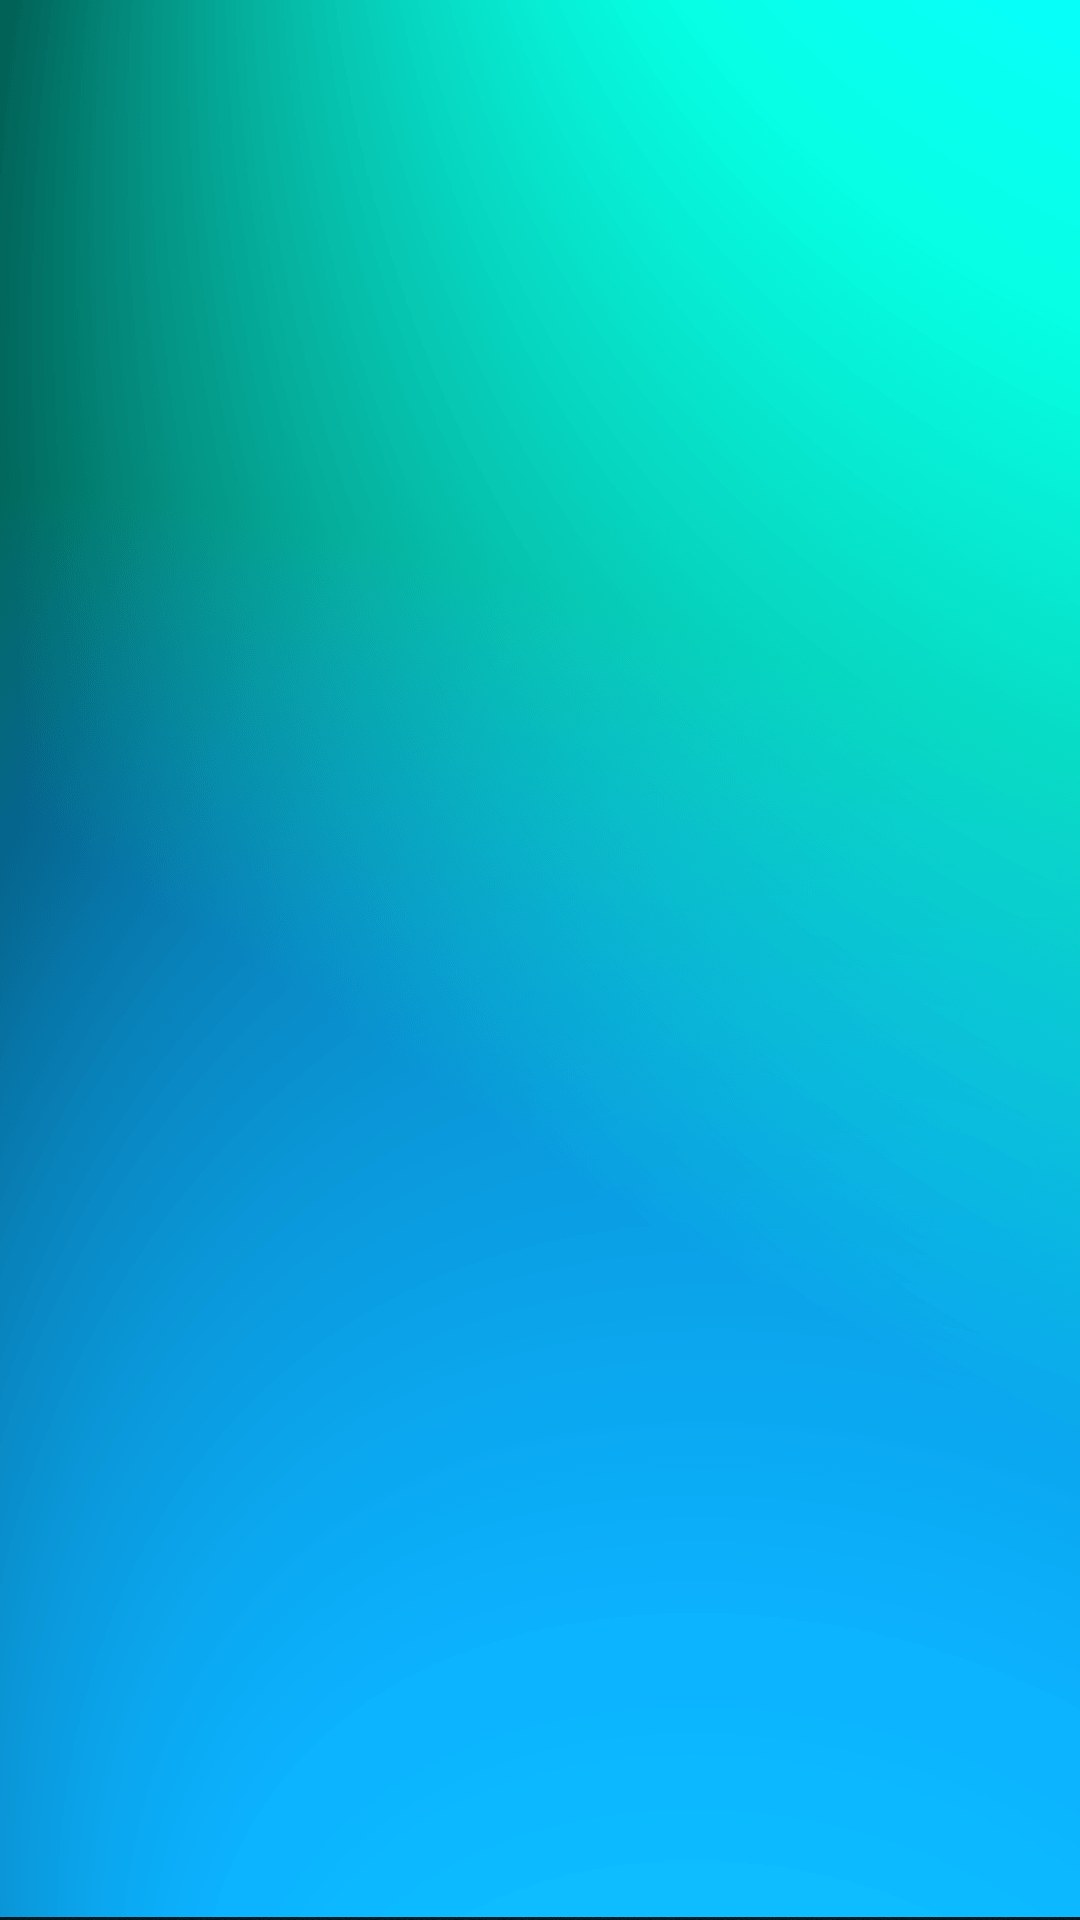 Blue And Green Wallpaper HD  PixelsTalkNet